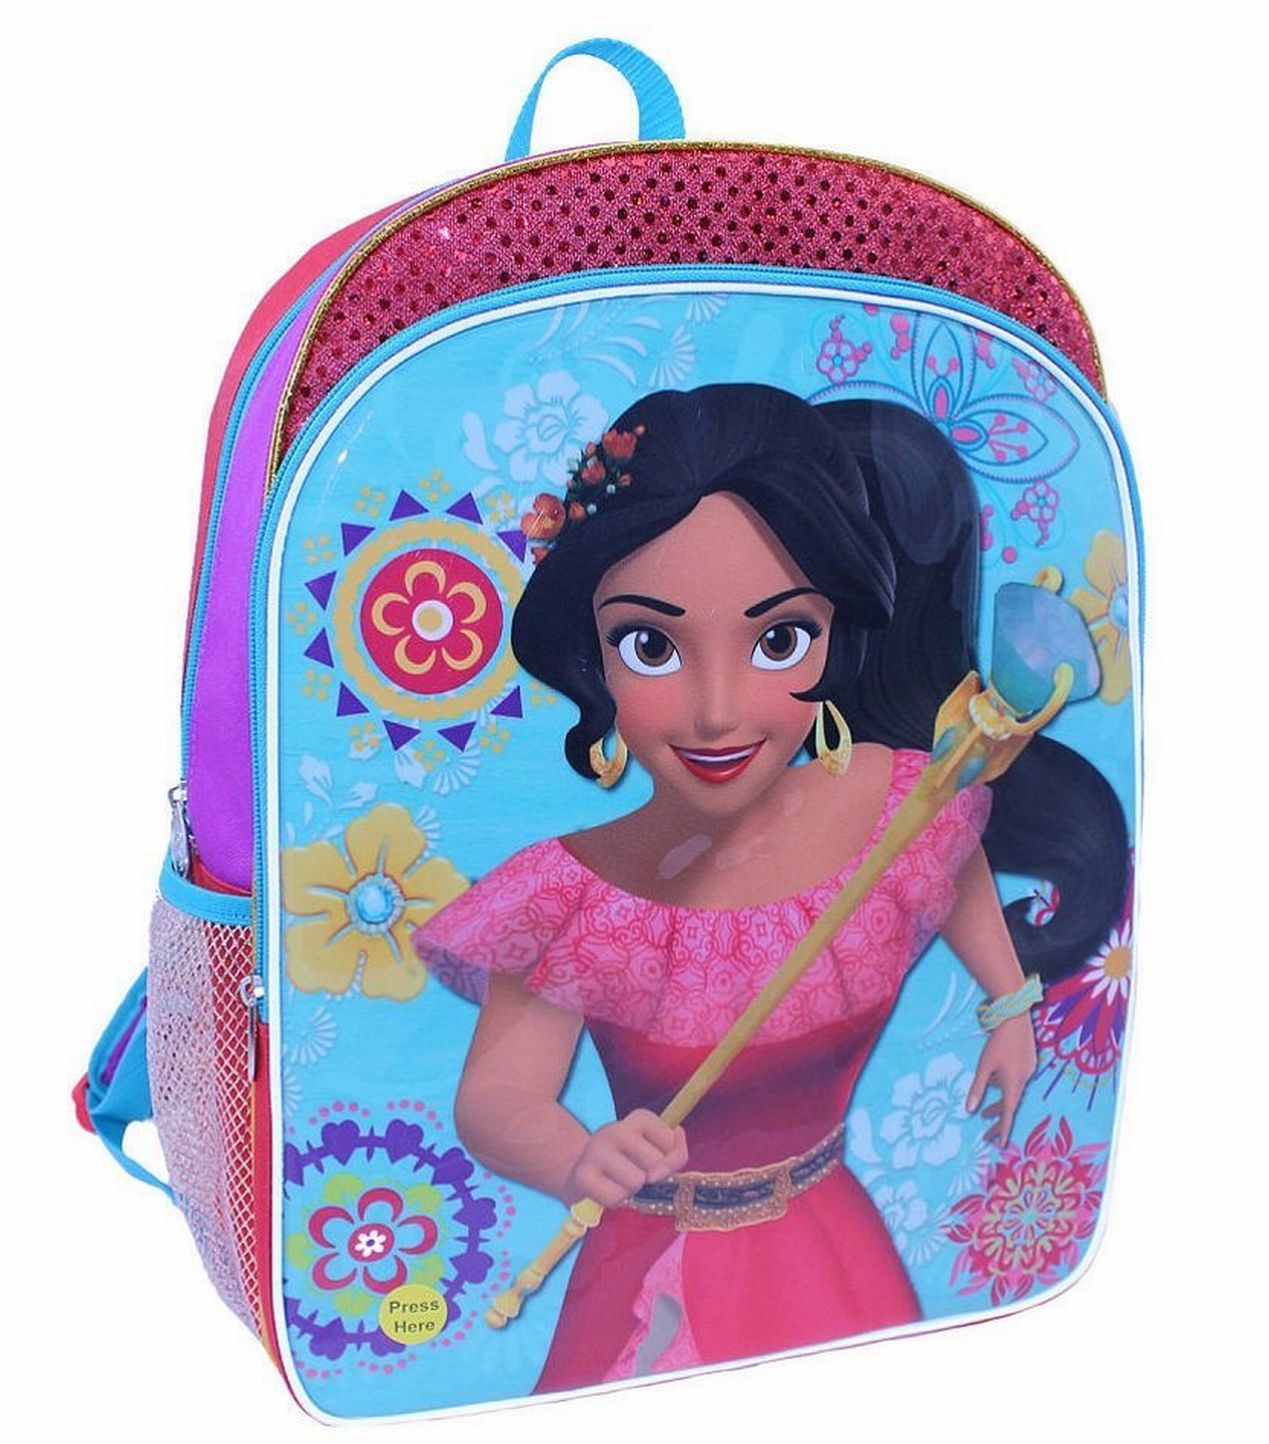 Disney Princess Elena of Avalor 16 inch Backpack with Side Mesh Pockets